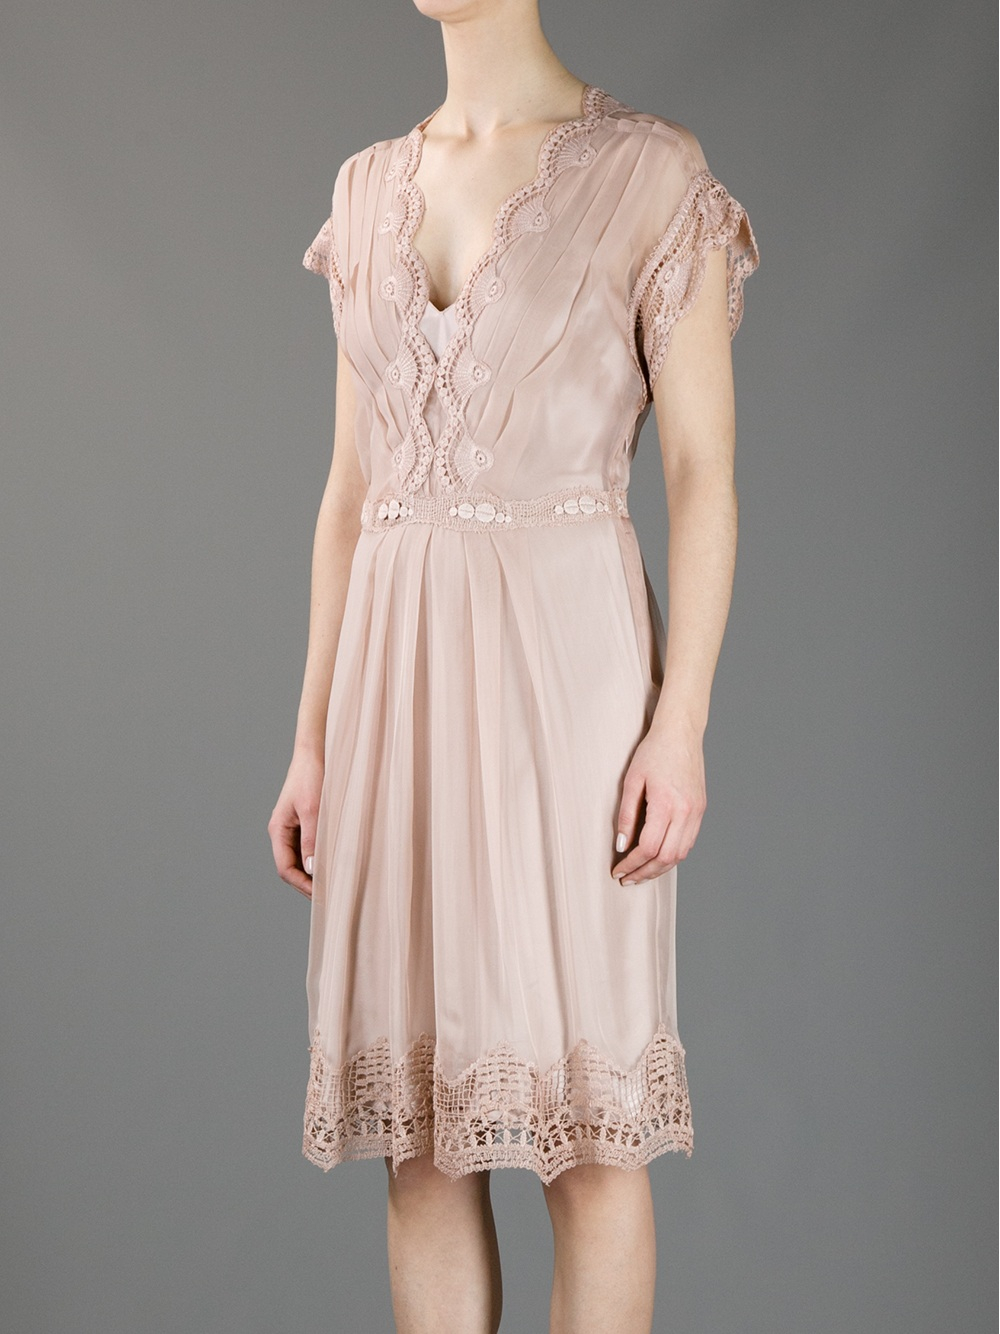 Lyst - Alberta Ferretti Lace Dress in Natural